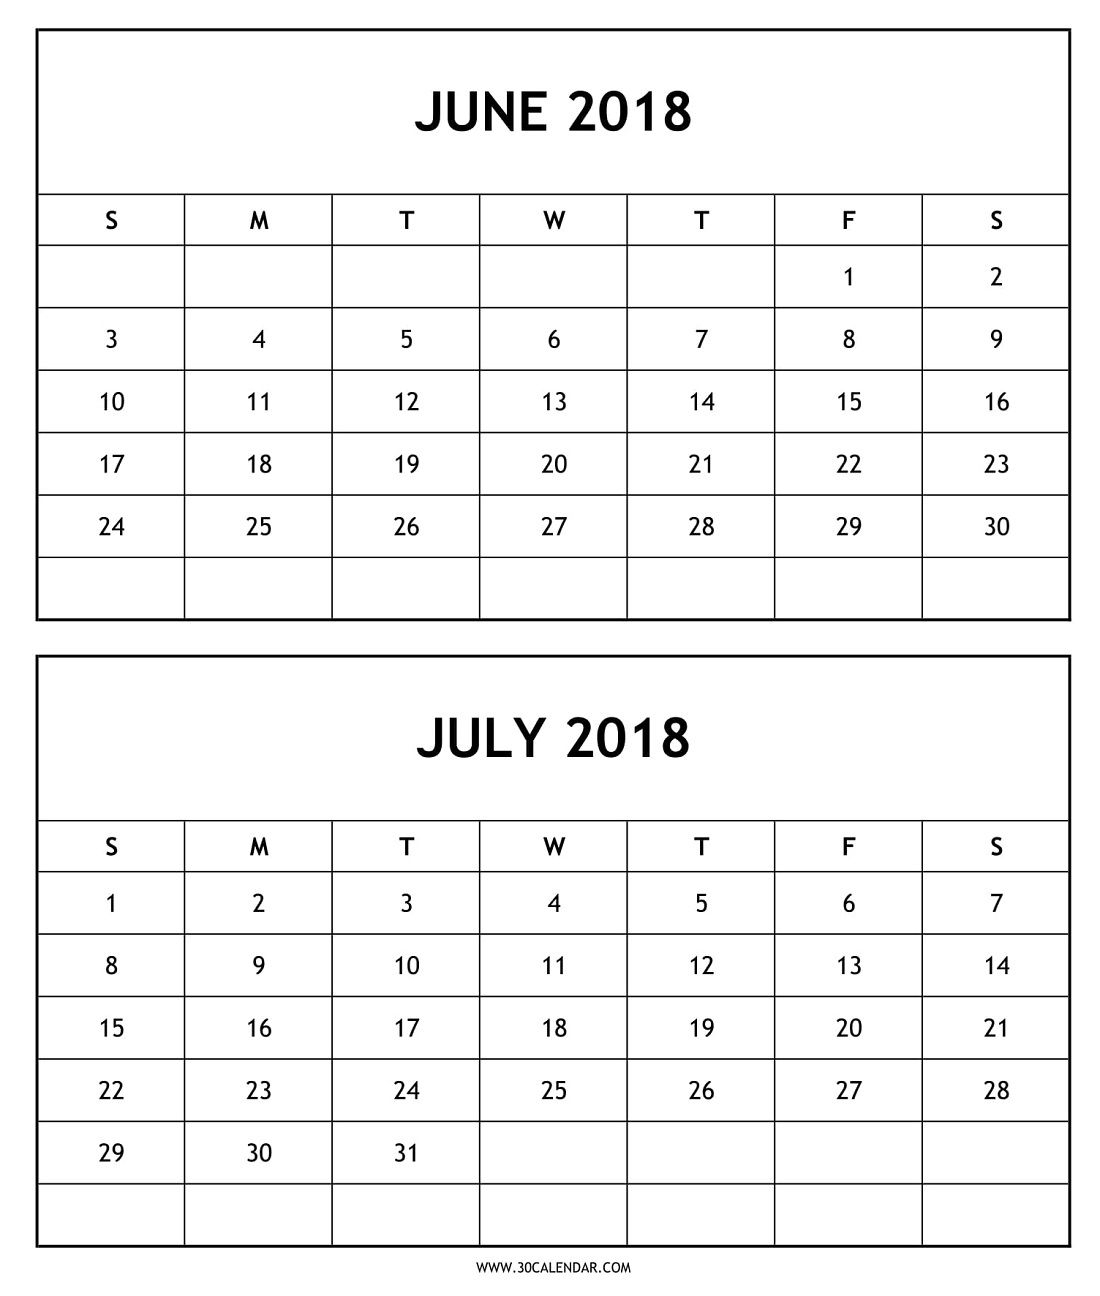 Download And Edit Calendar June July 2018 | 2018 Calendar | Calendar within Calendar For June And July